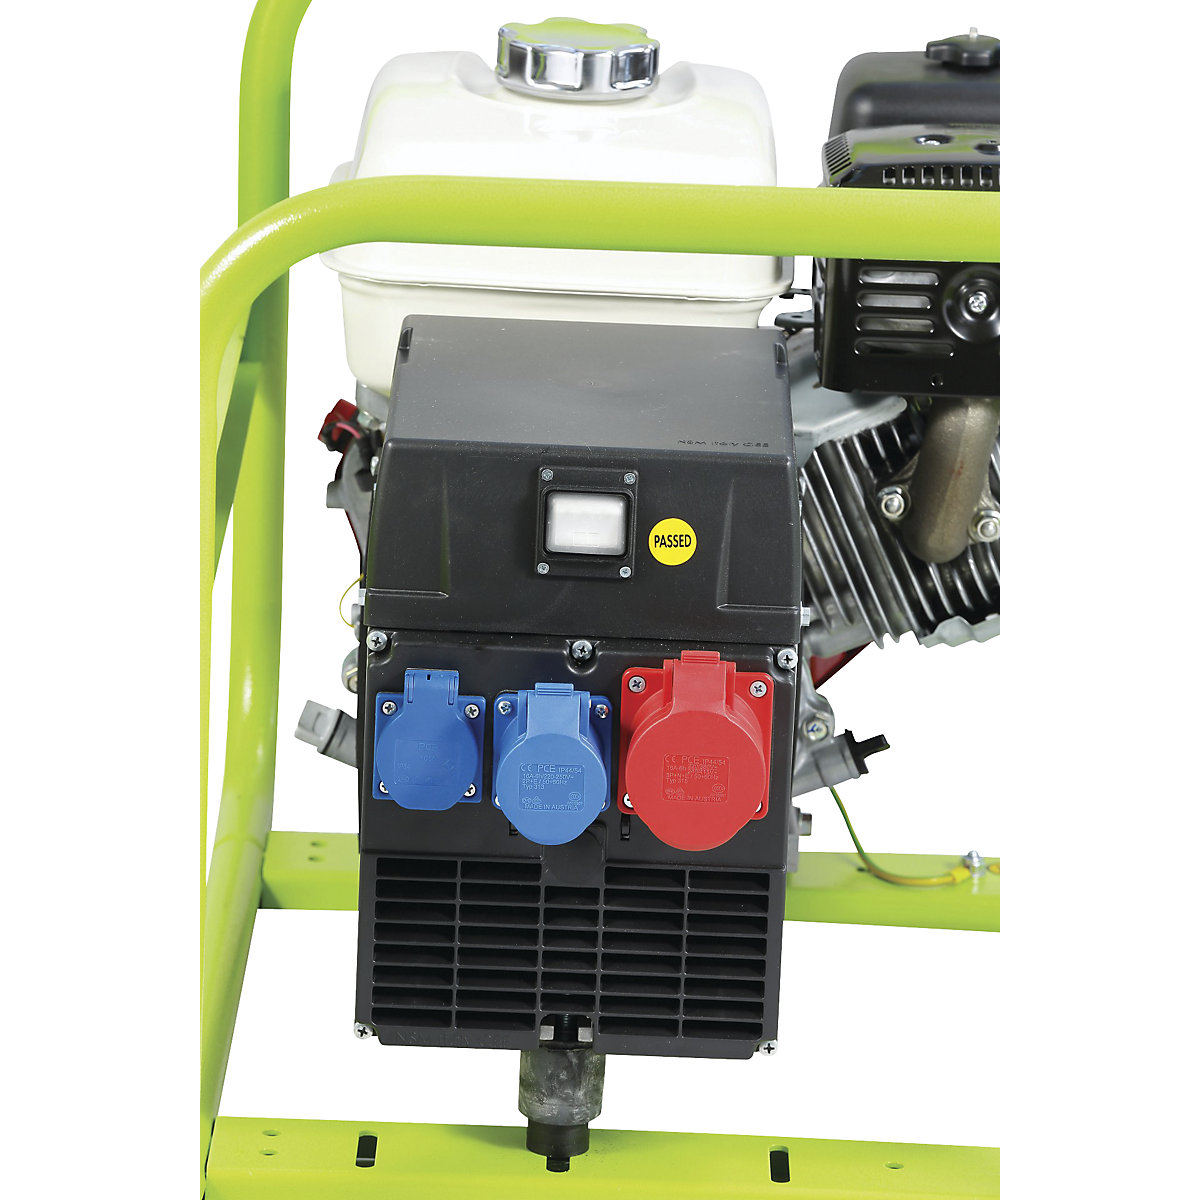 Generador eléctrico serie E – gasolina, 230 V – Pramac (Imagen del producto 5)-4